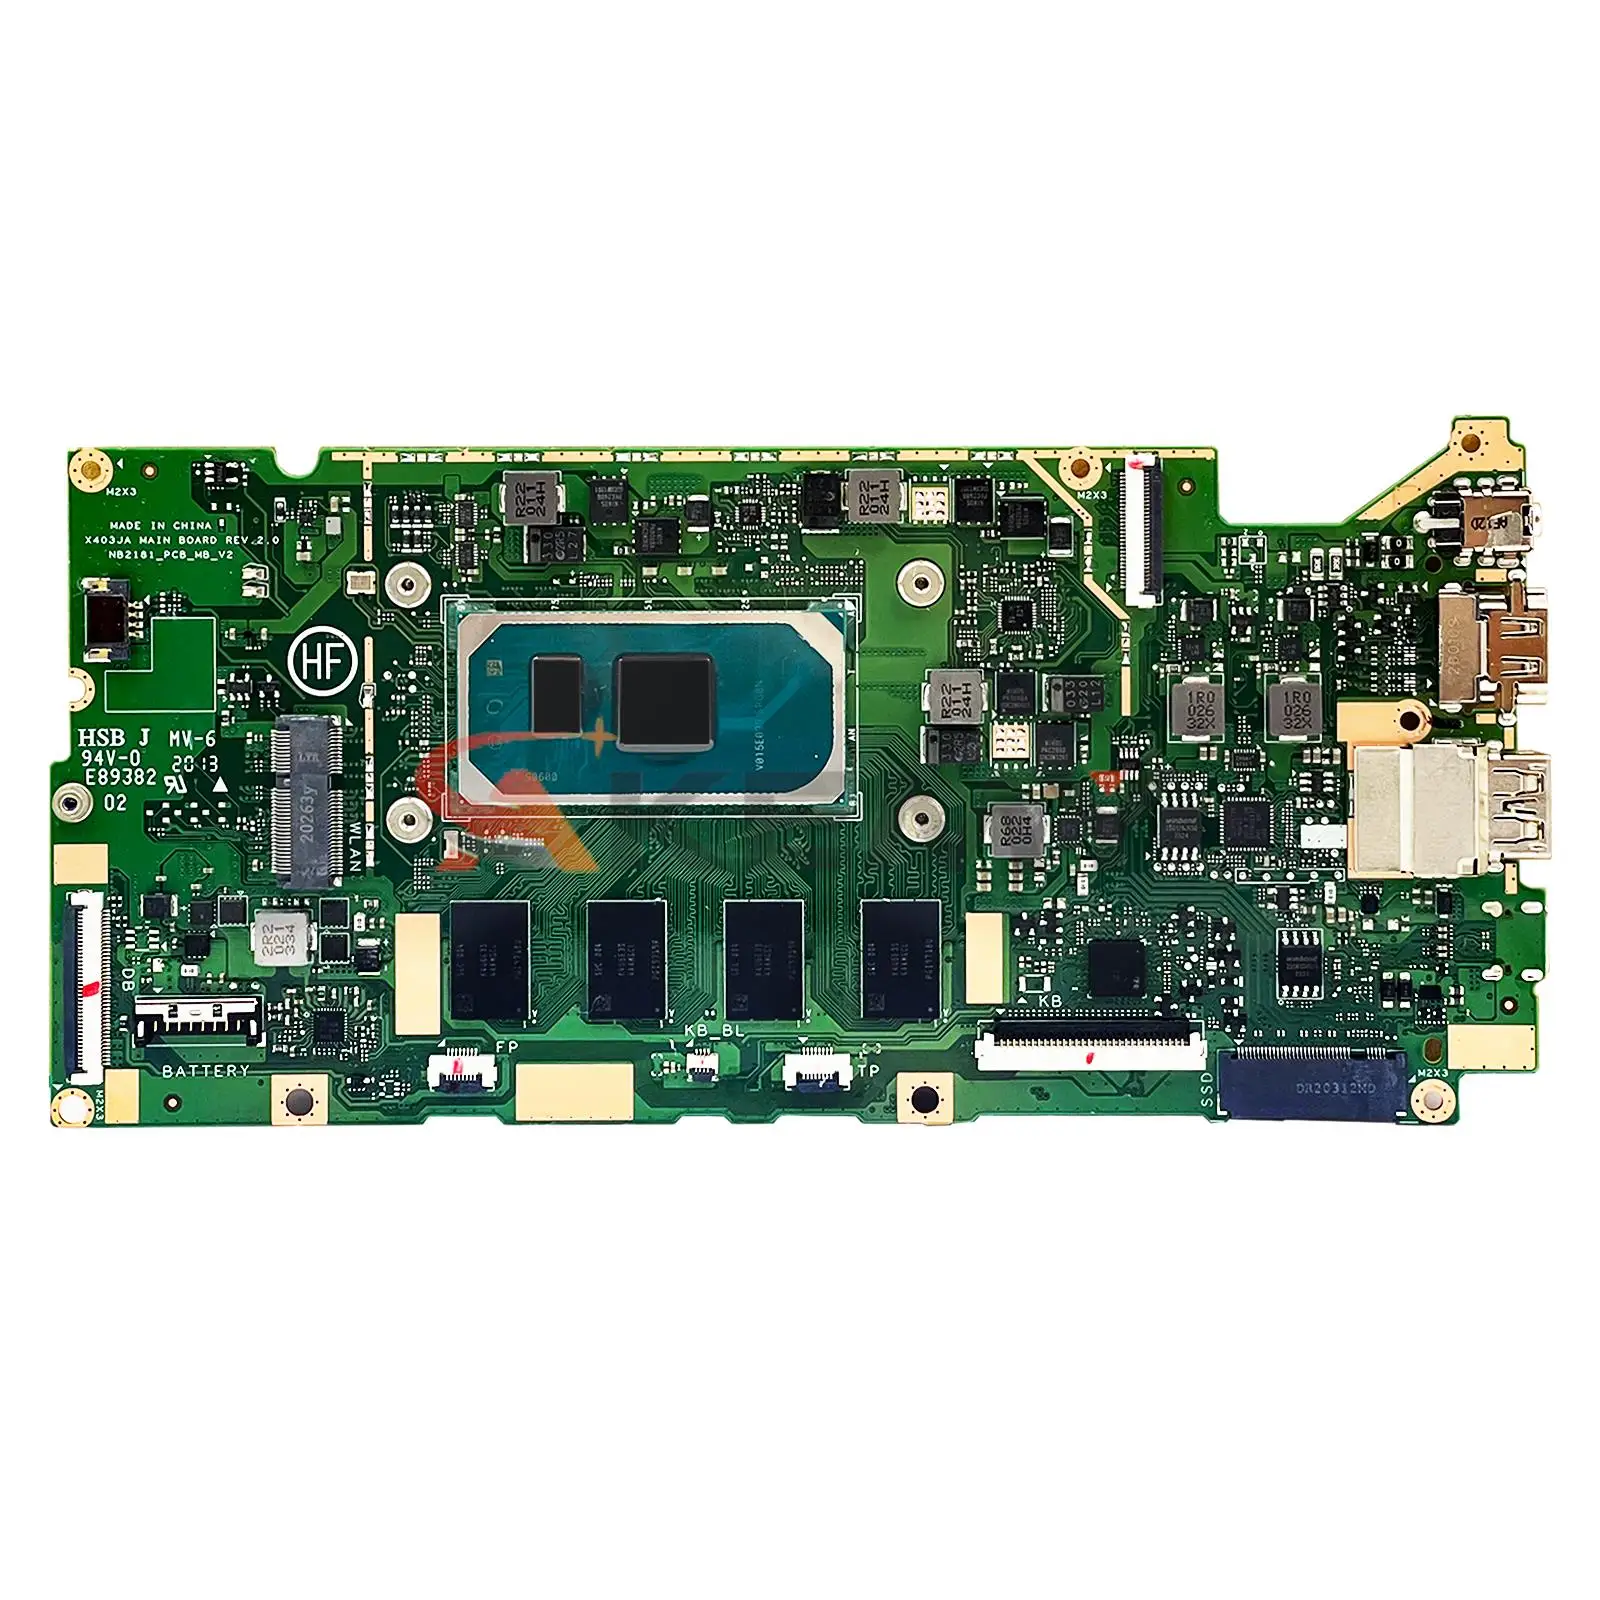 

X403JA Notebook Mainboard For Asus VivoBook 14 X403J X403JA S403JA Laptop Motherboard i5-1035G1 I7-1065G7 CPU 8G RAM